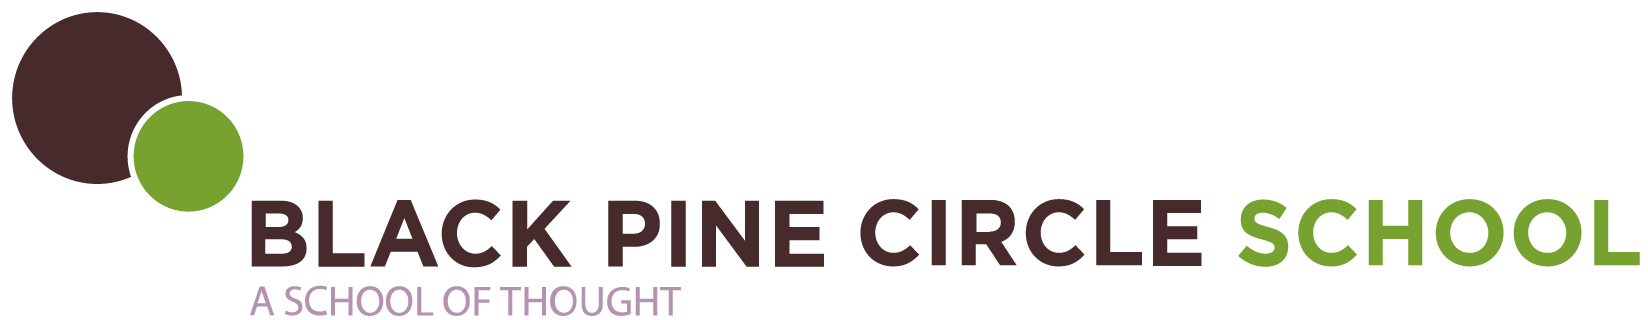 Black Pine Circle School logo